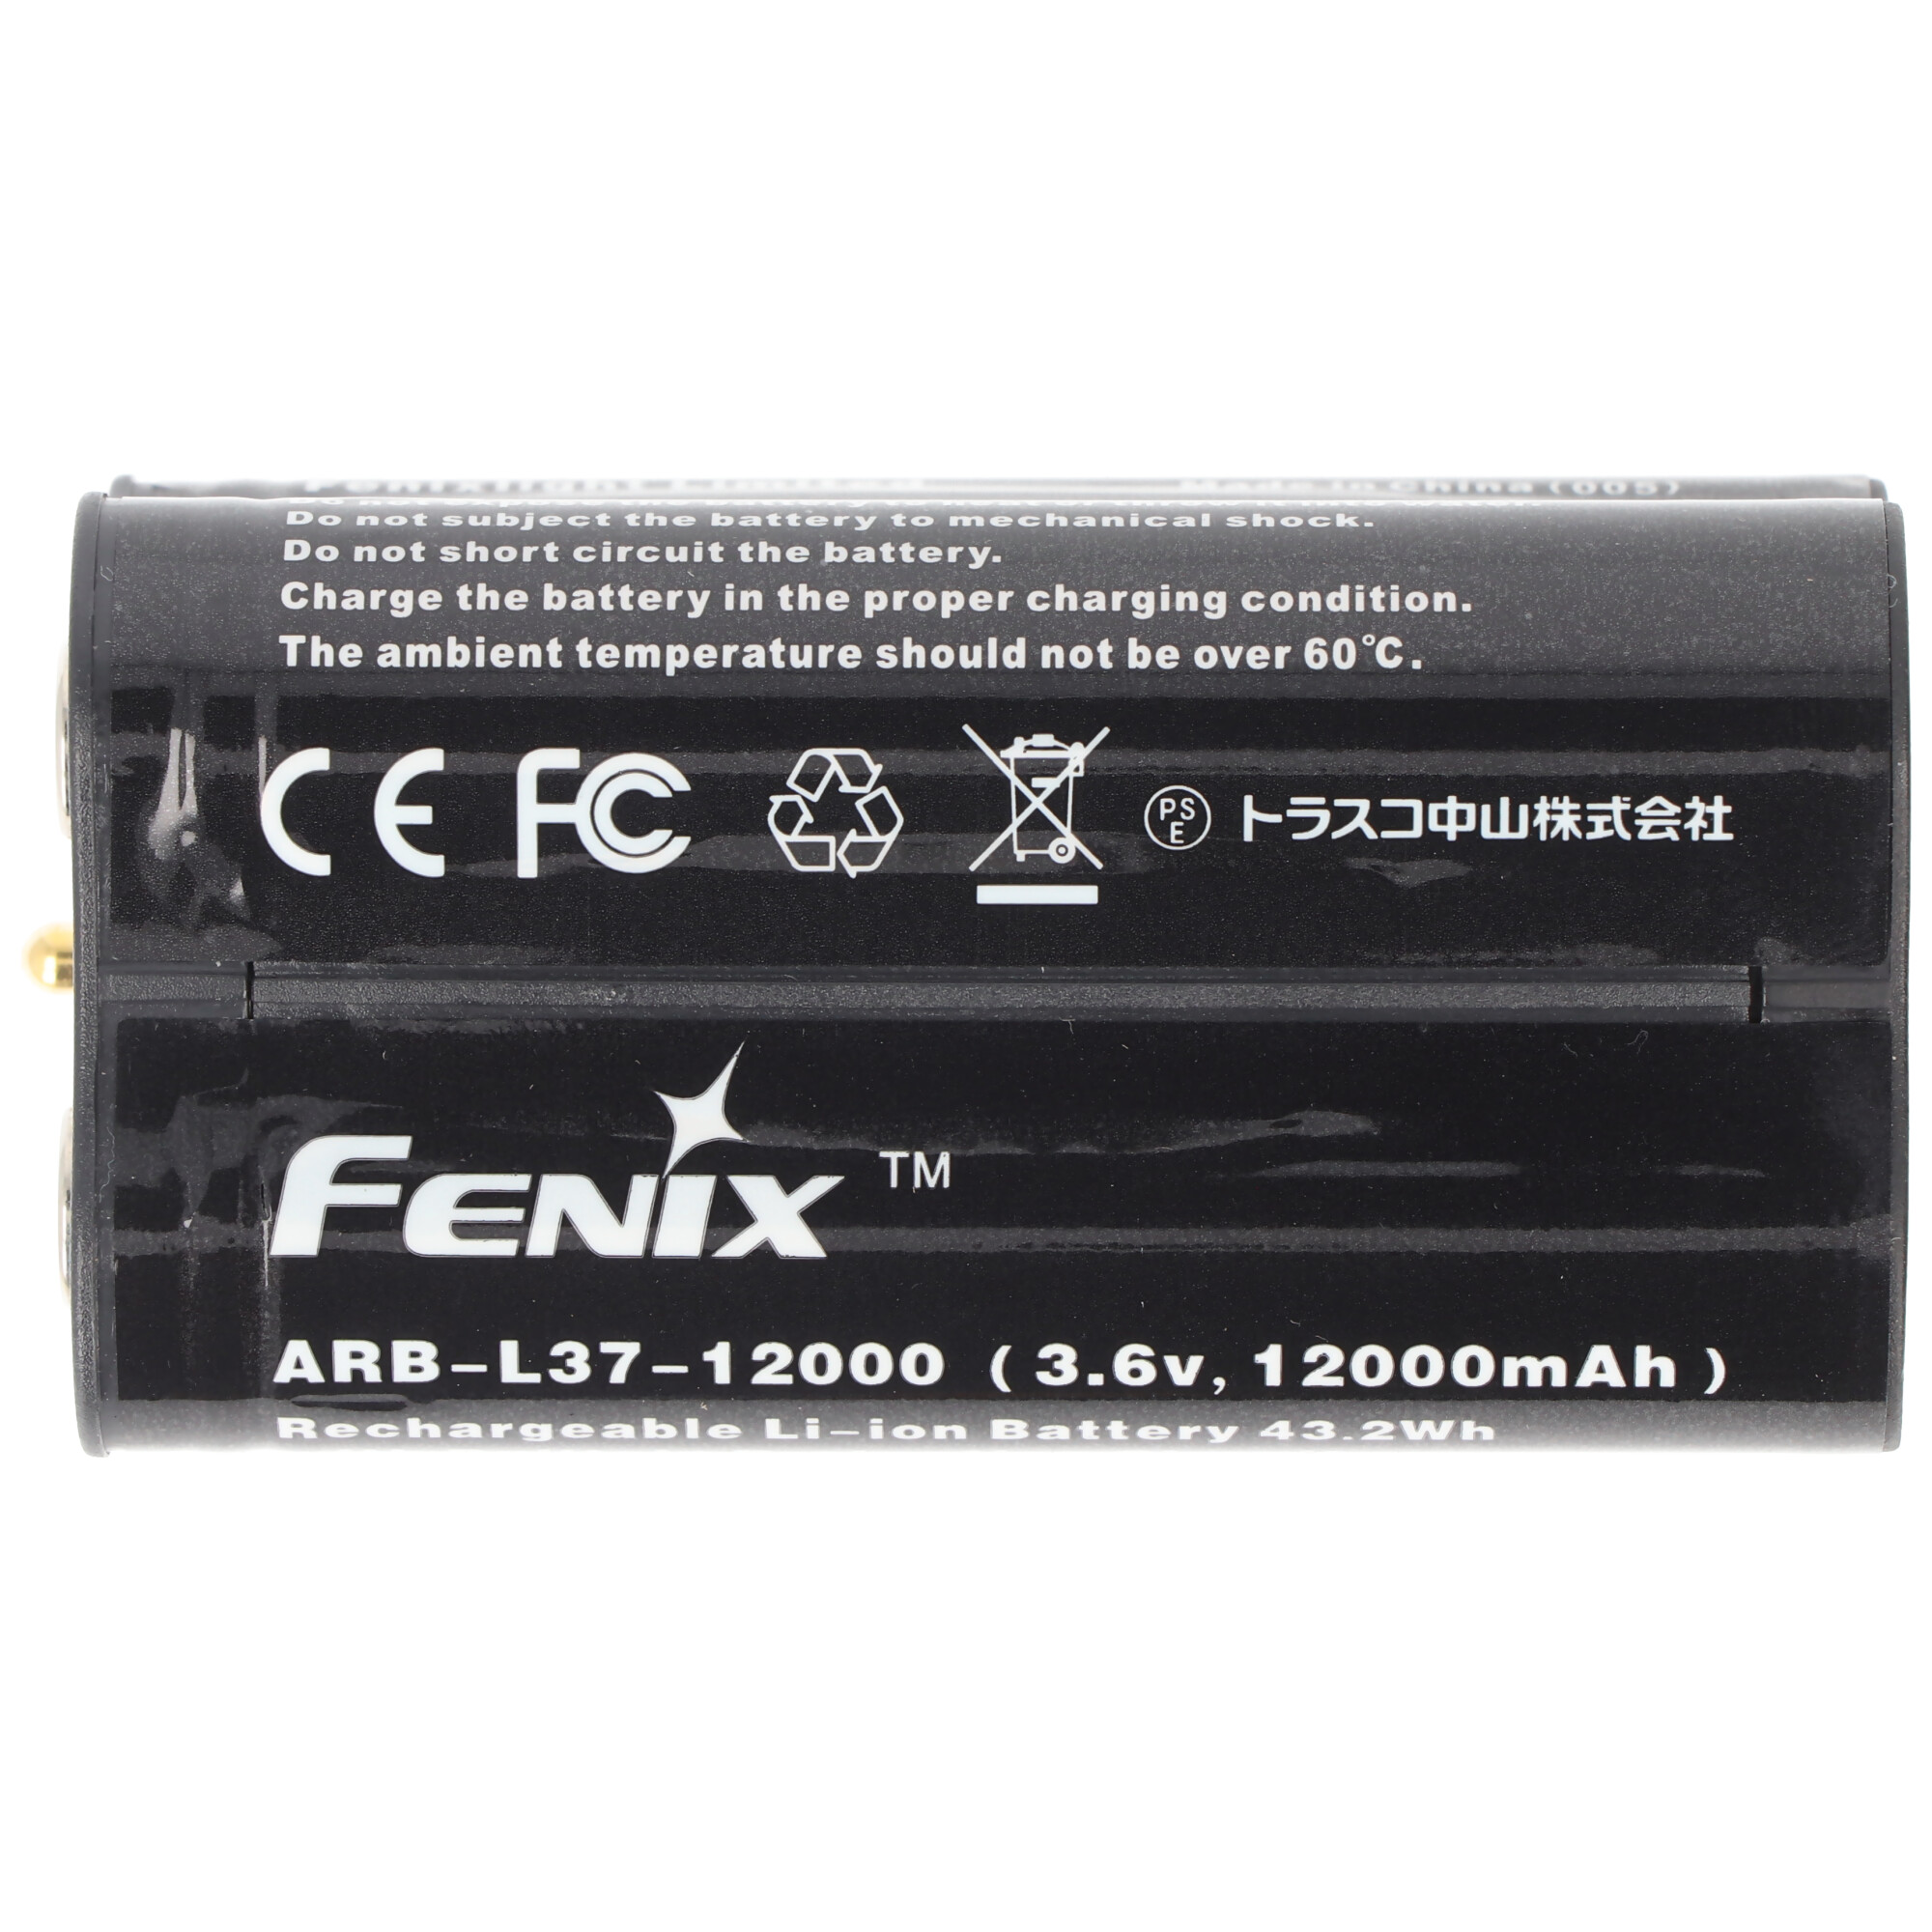 Akku passend für die Fenix LR40R LED Taschenlampe, Fenix ARB-L37-12000 Li-Ion Akkupack für LR40R 7cm x 3,5cm x 3,5cm